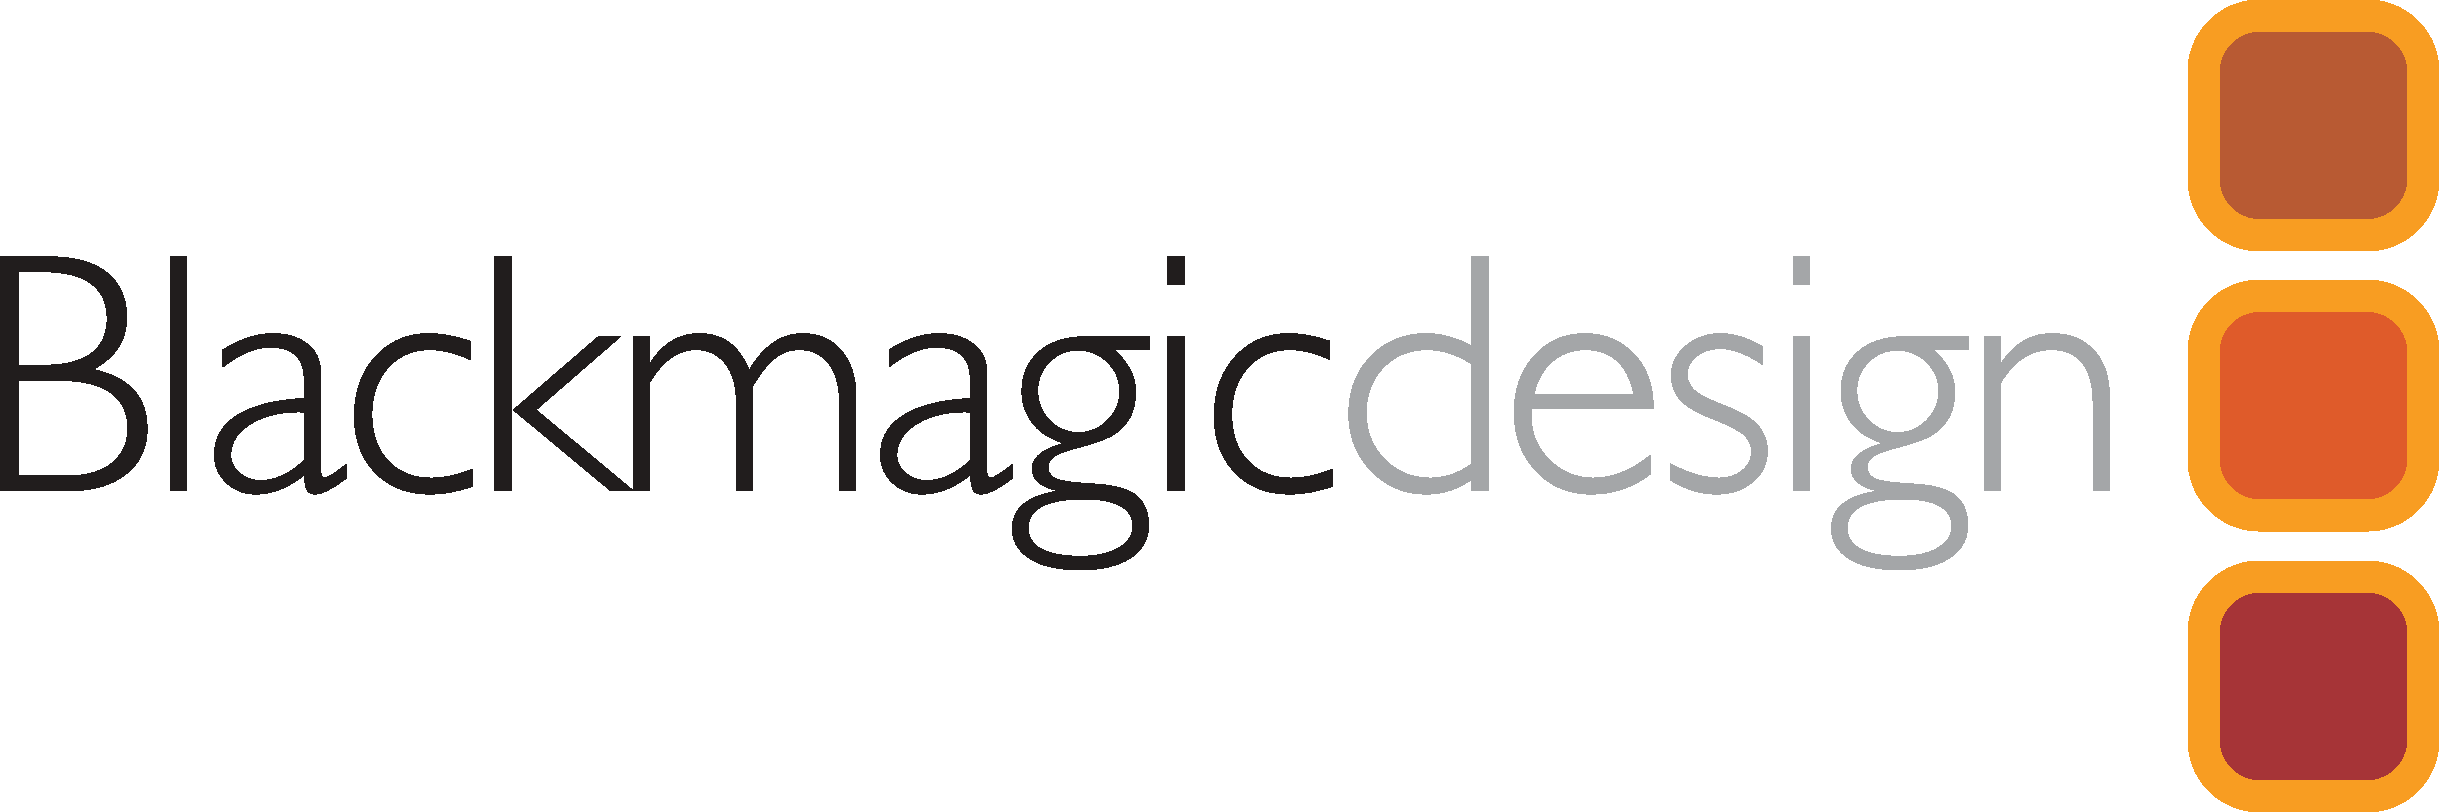 Blackmagic Design Logo png